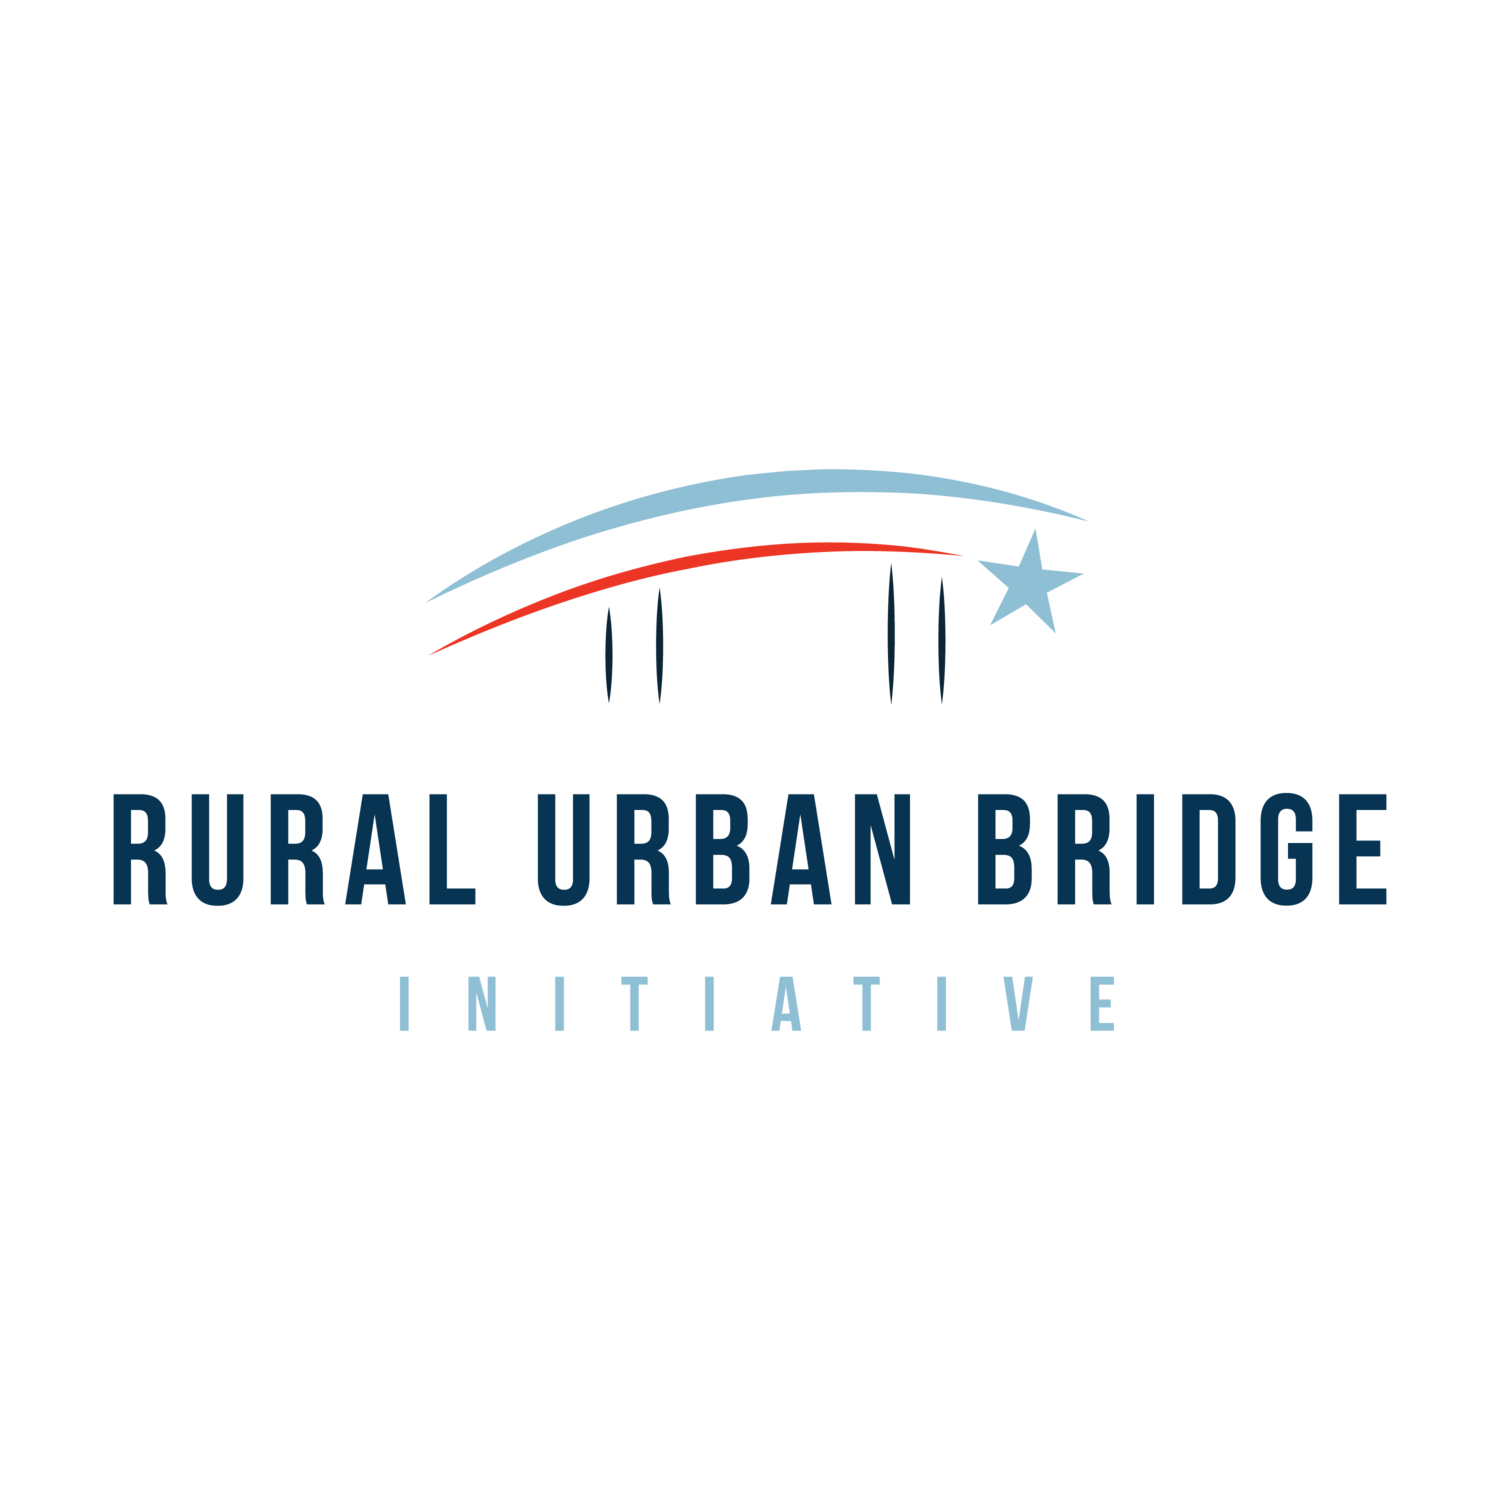 Rural Urban Bridge